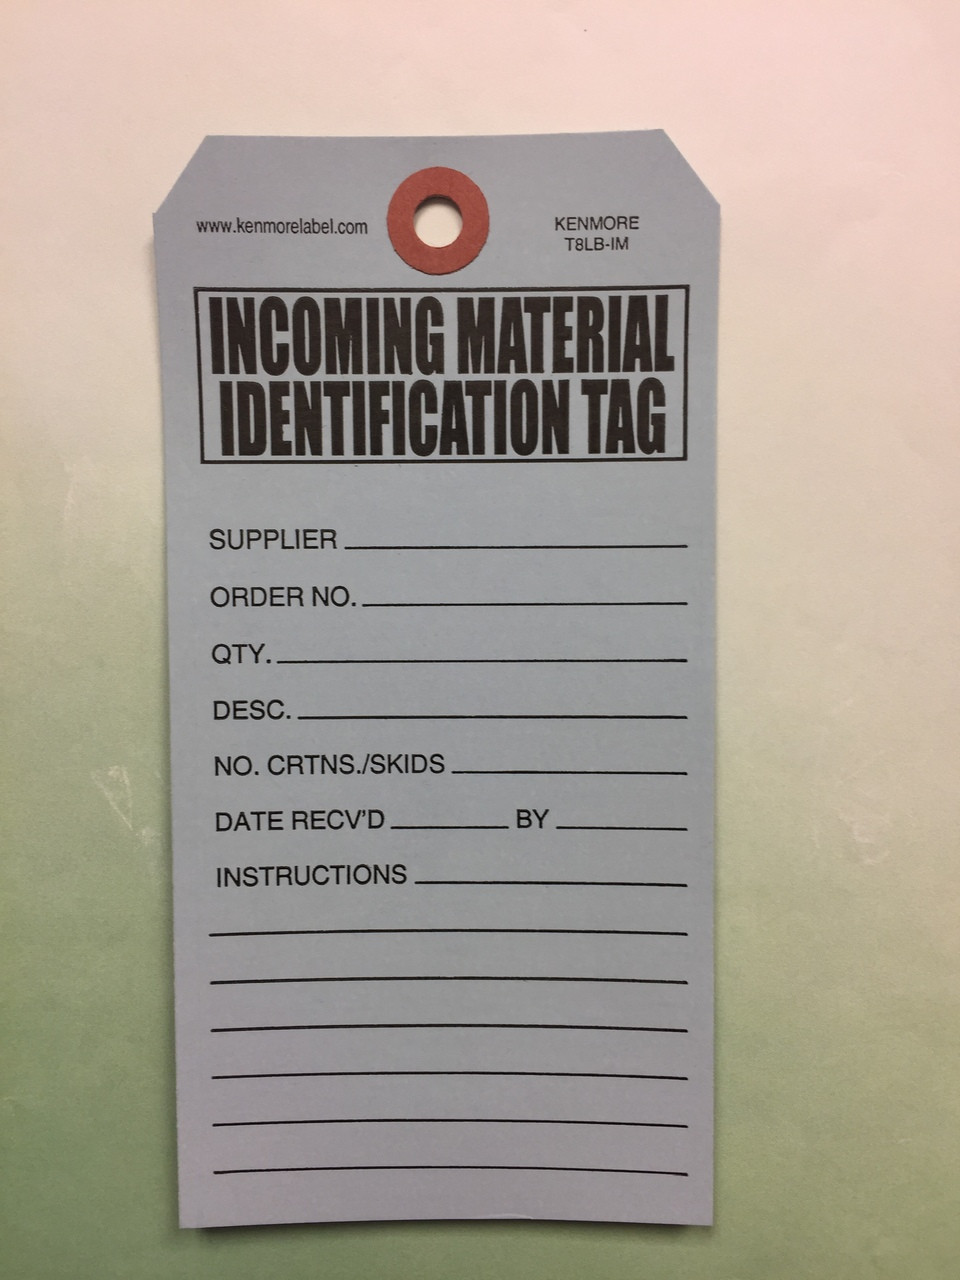 INCOMING MATERIAL IDENTIFICATION - Kenmore Label u0026 Tag